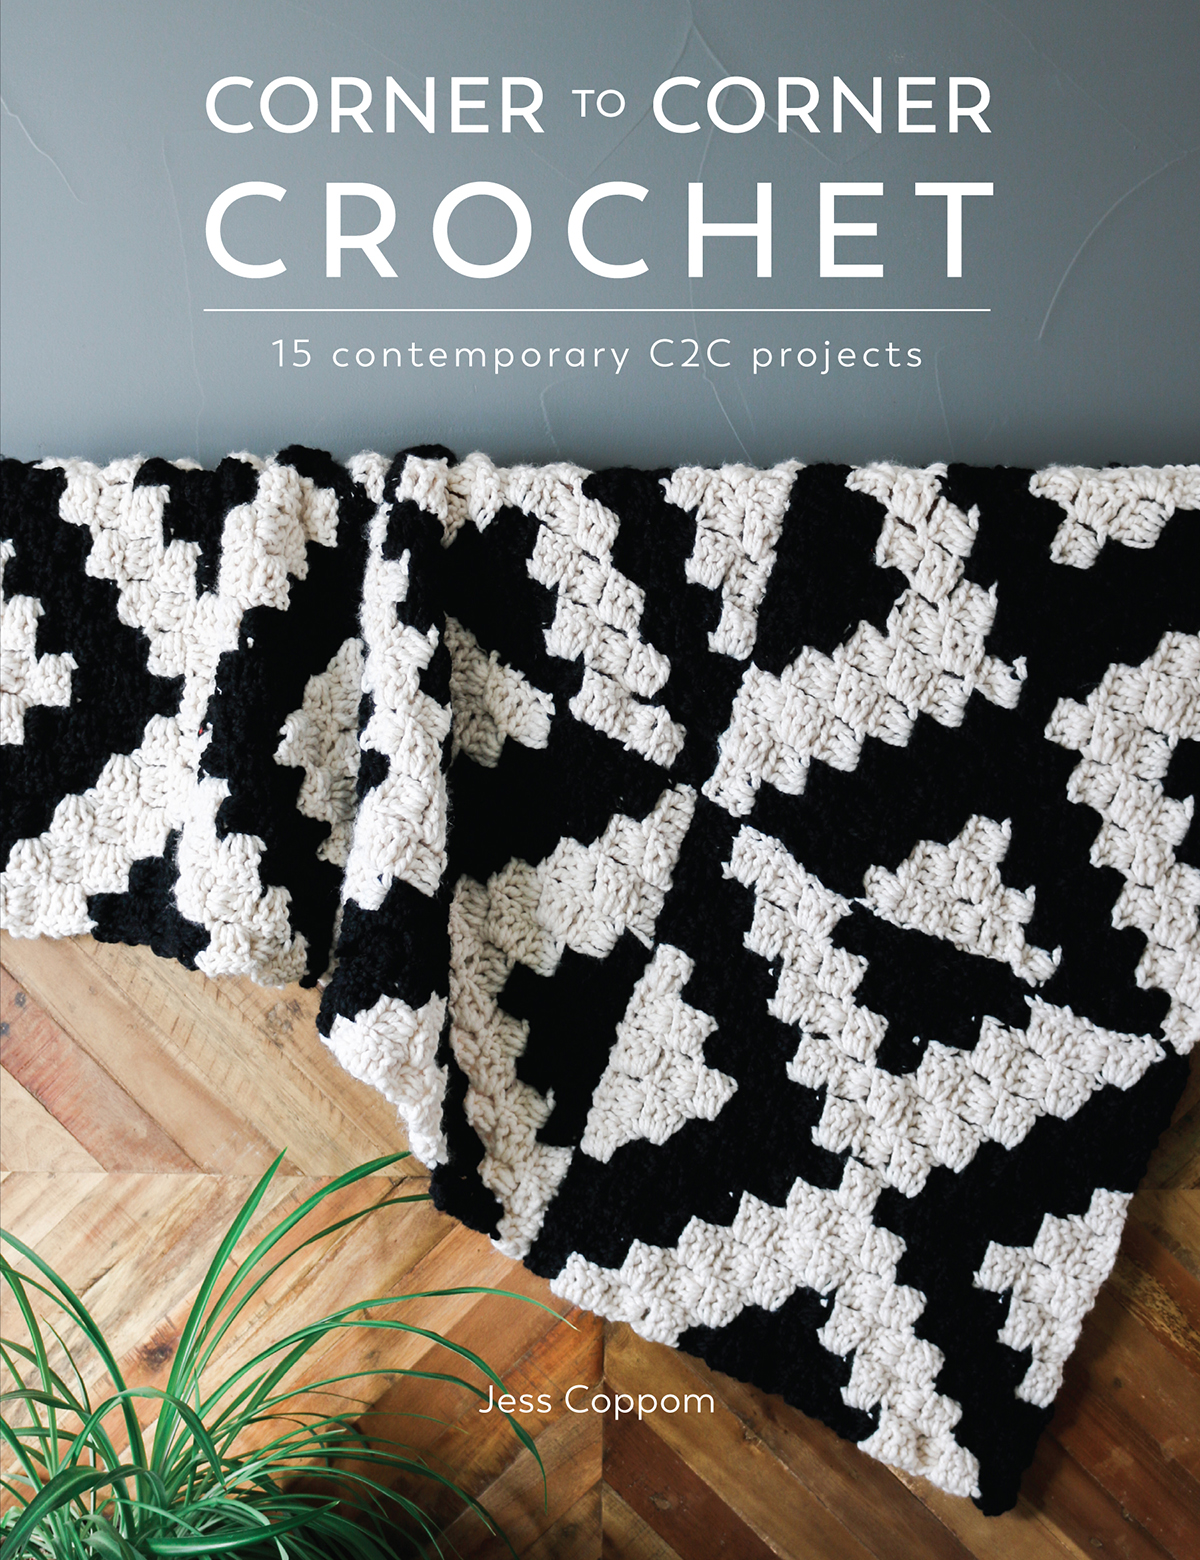 Corner to corner crochet 15 contemporary C2C projects - image 1